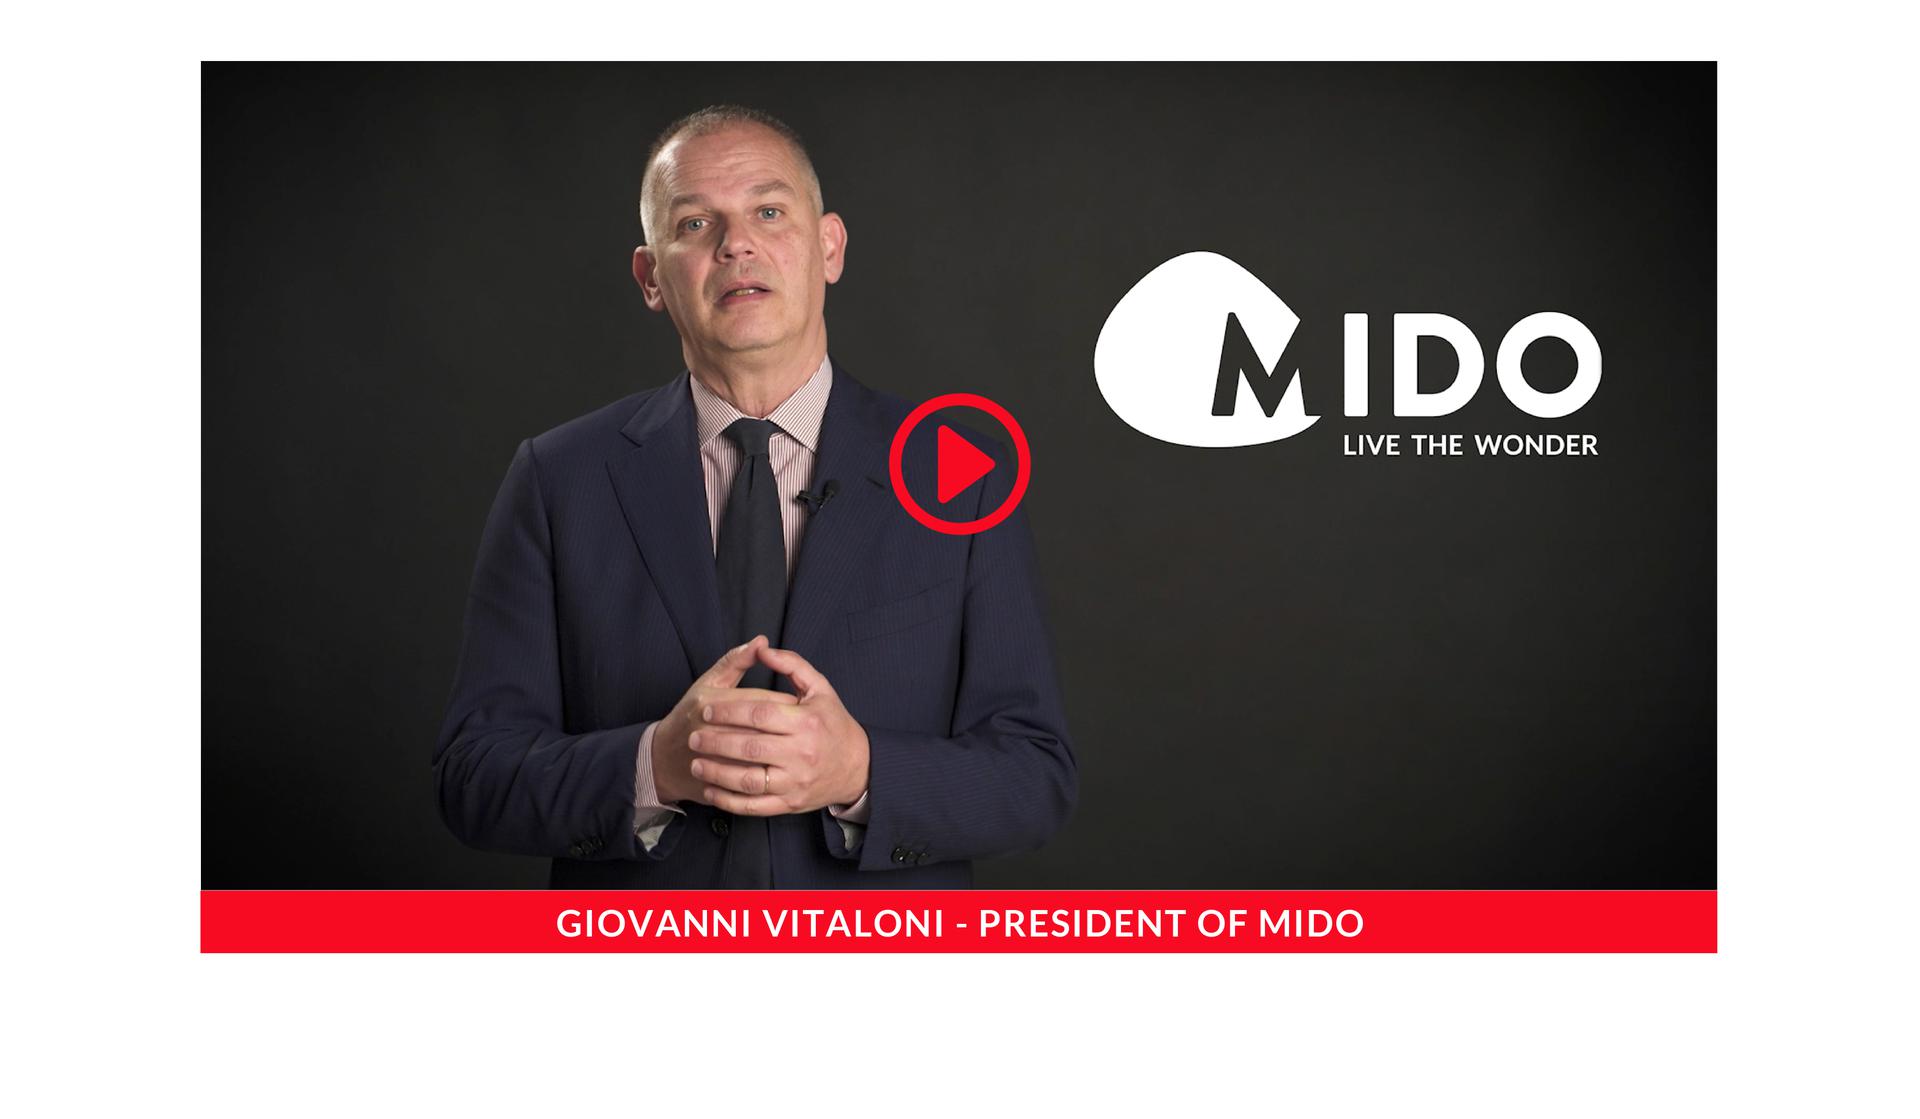 Giovanni Vitaloni - President of MIDO